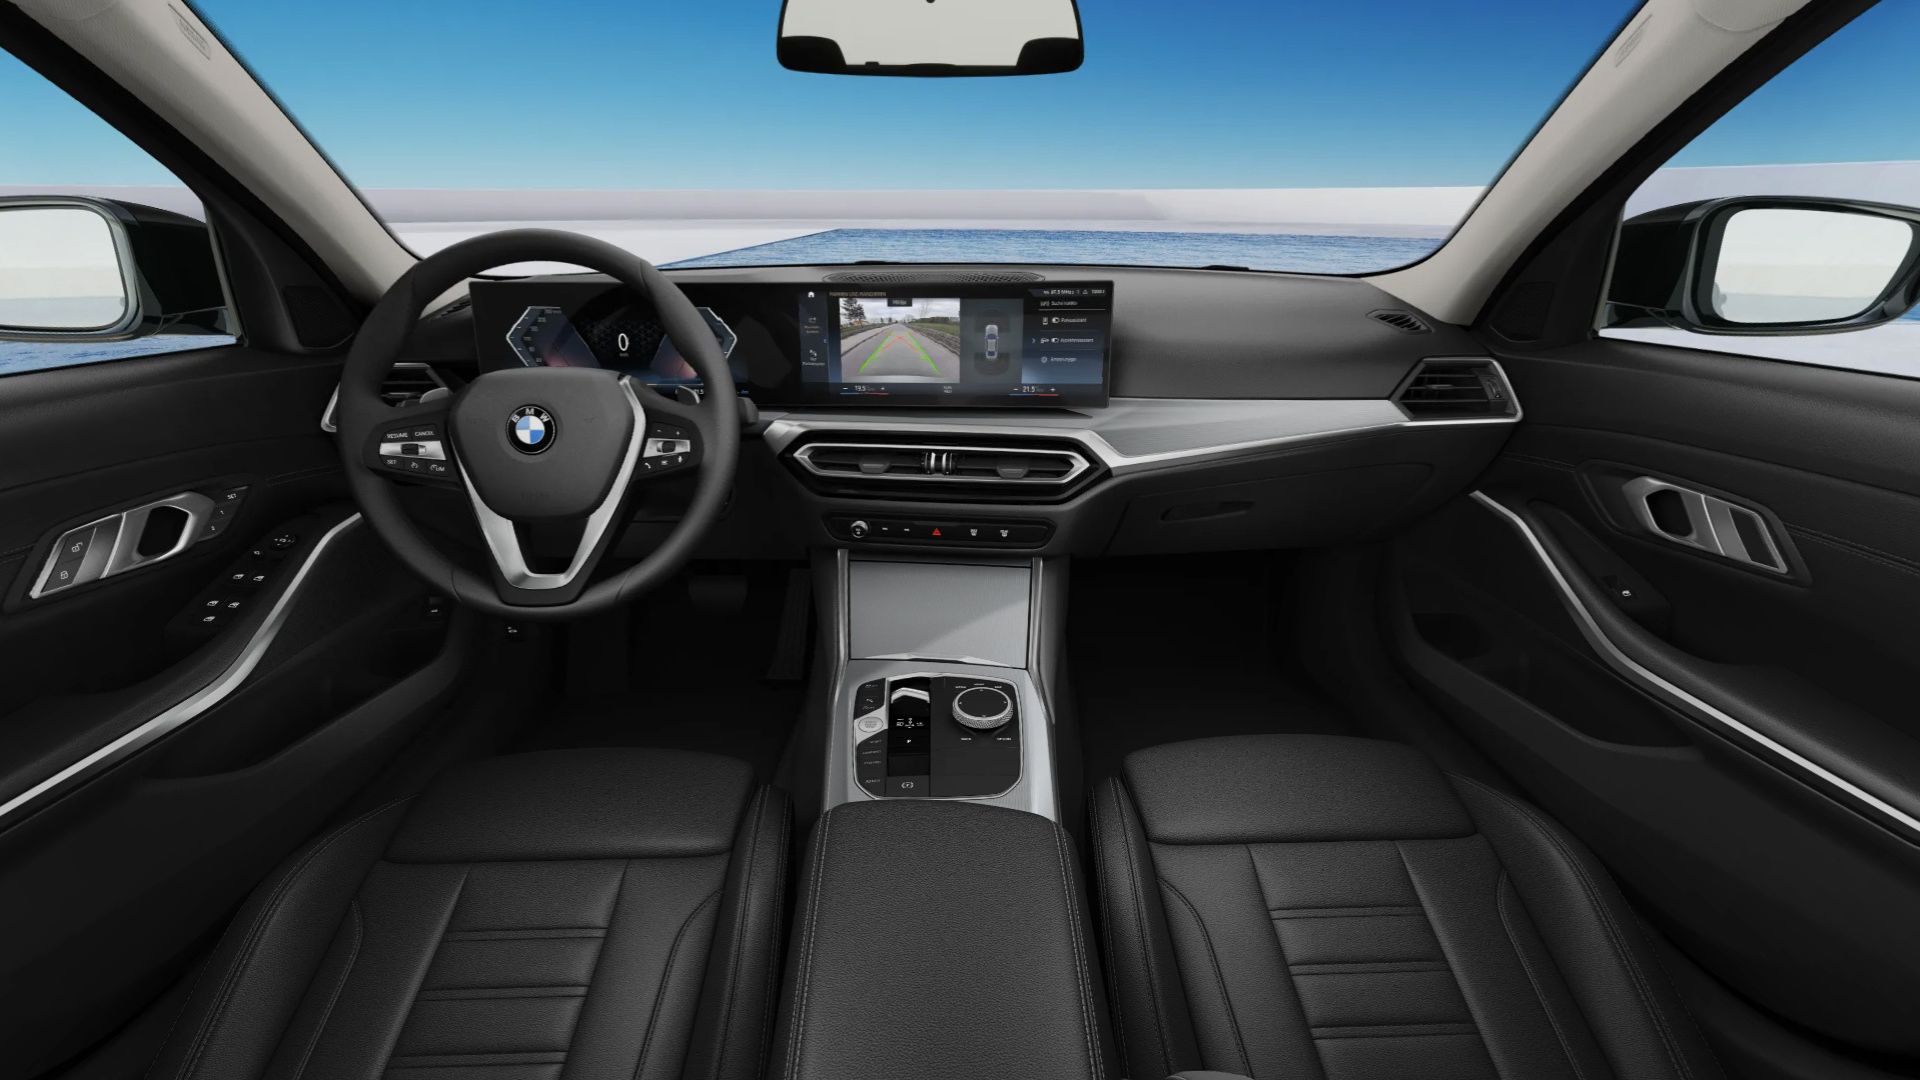 BMW 318i 2023 specs, features, prices